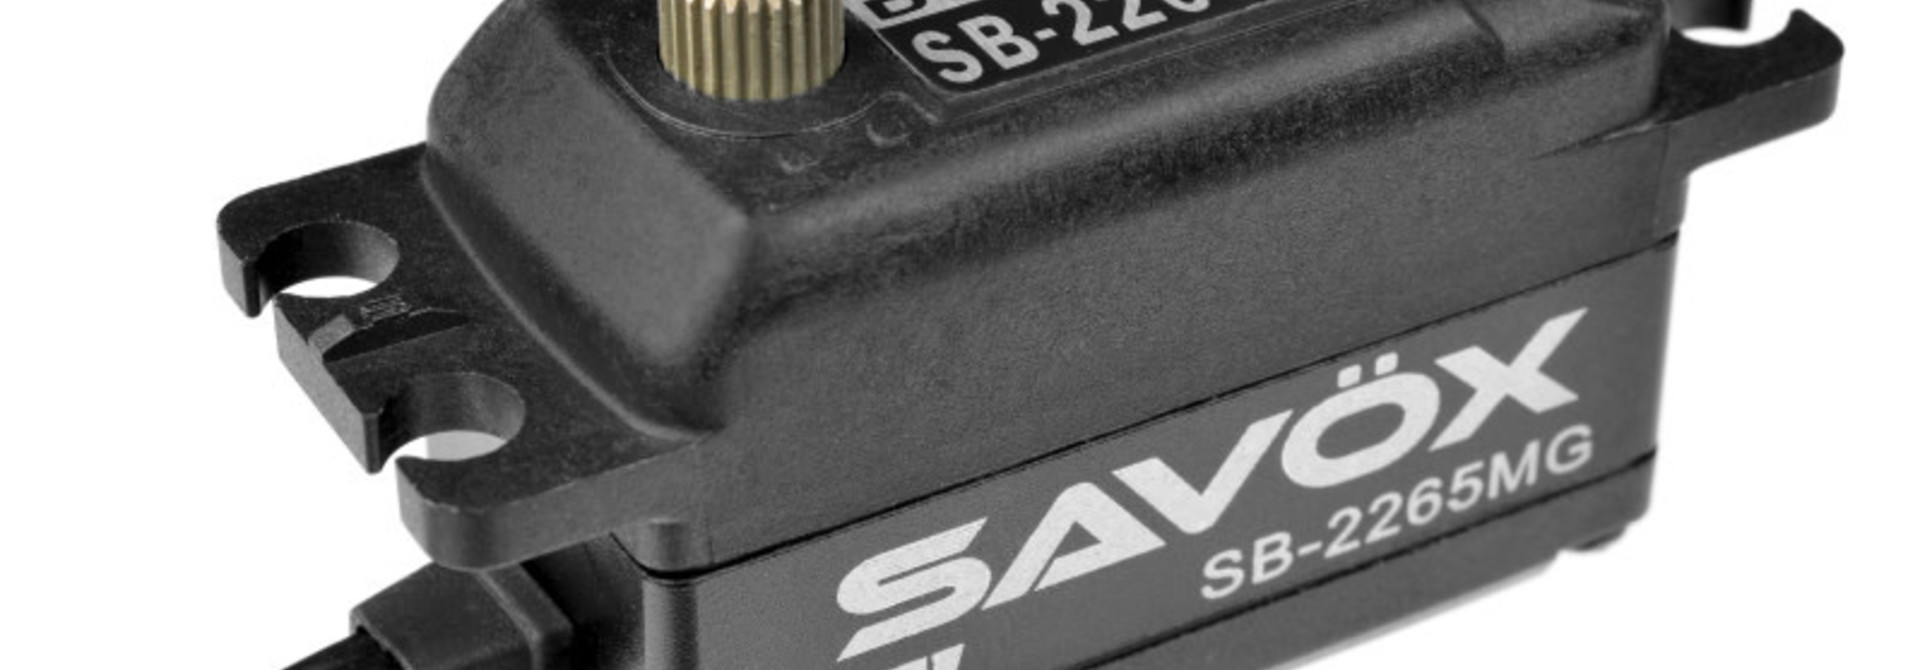 Savox - Servo - SB-2265MG - Digital - High Voltage - Brushless Motor - Metal Gears